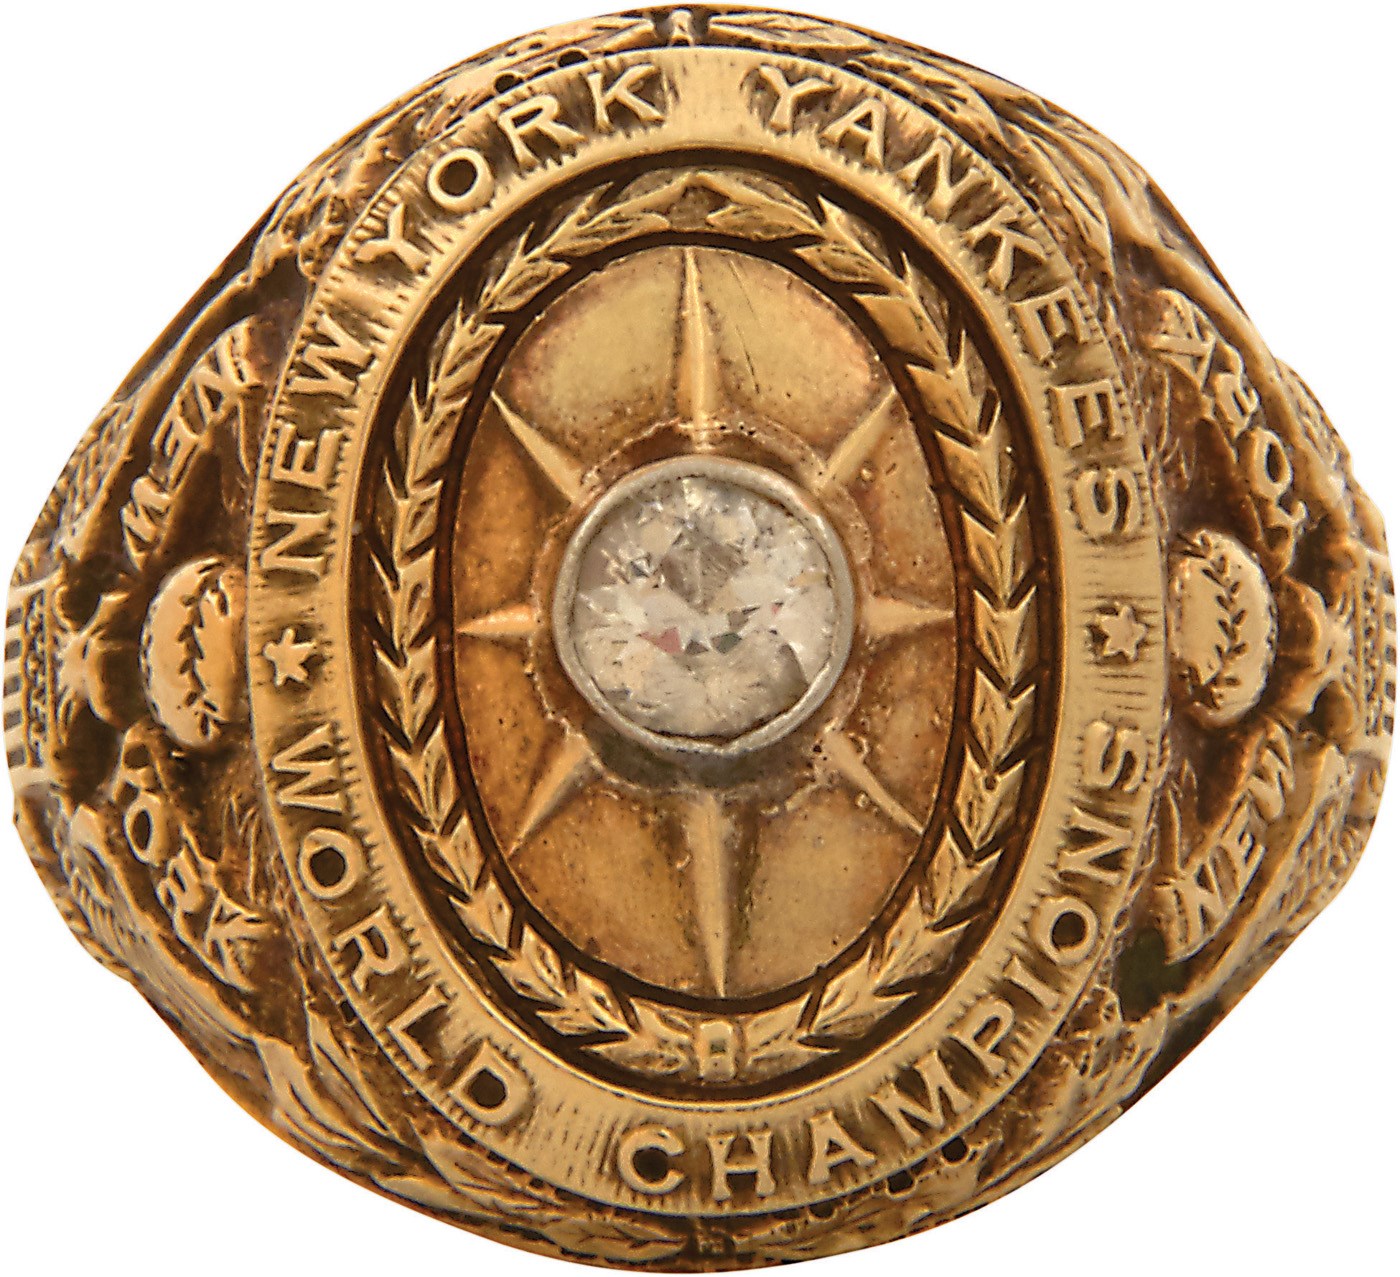 - Babe Ruth's 1927 New York Yankees World Series Ring